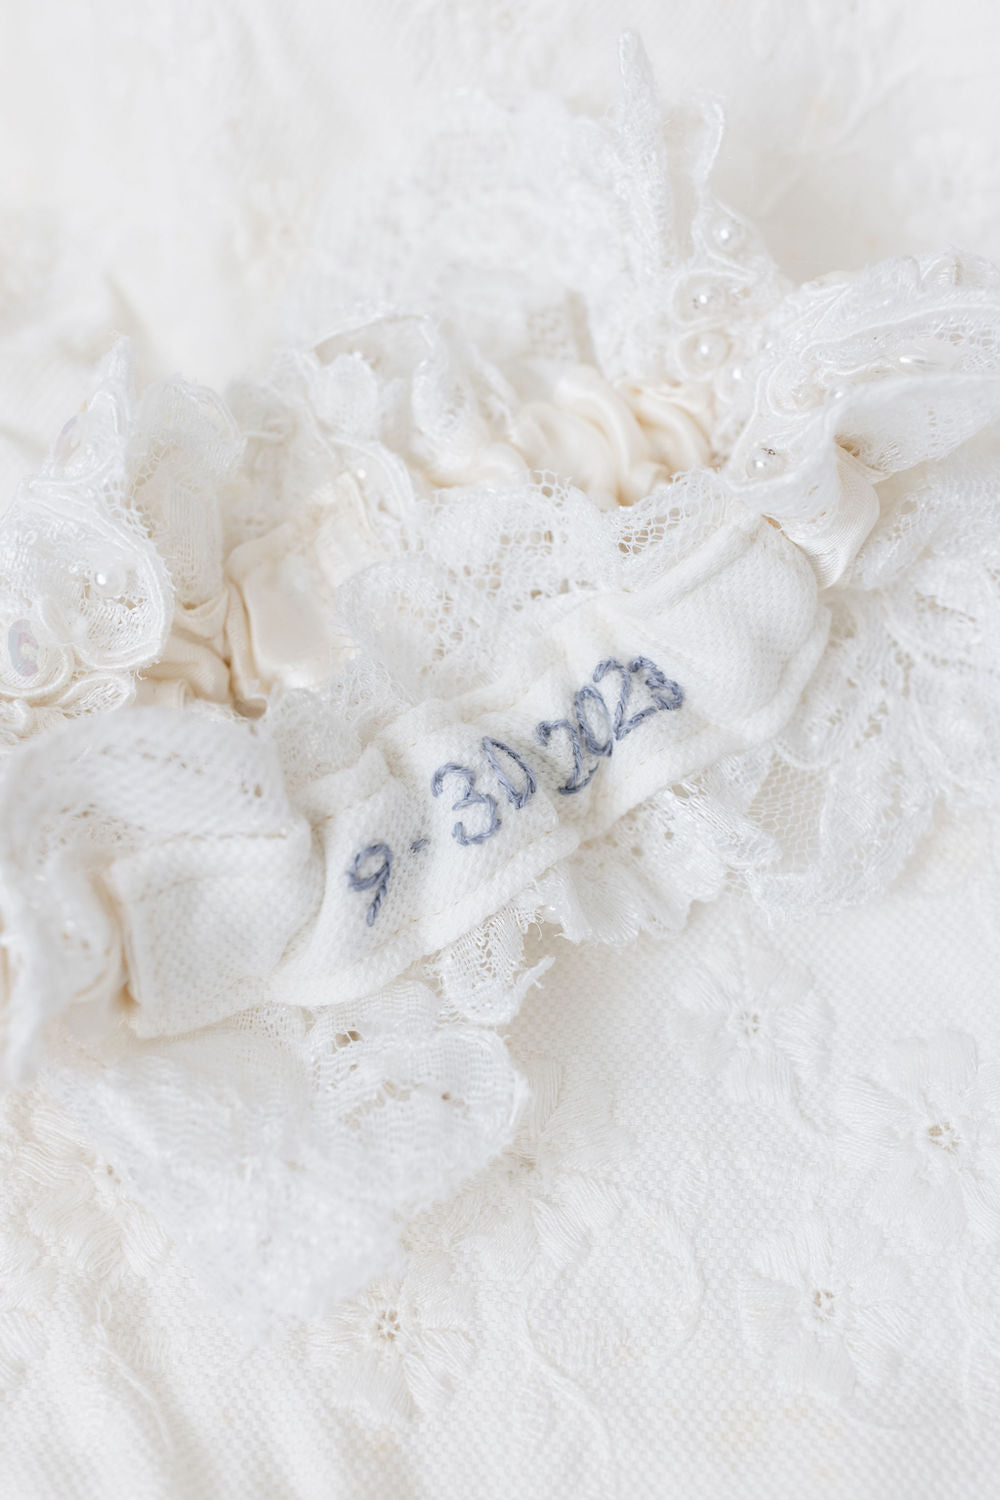 wedding heirloom garter with ivory lace main garter and custom blue embroidery from mom's wedding dress hem handmade by The Garter Girl